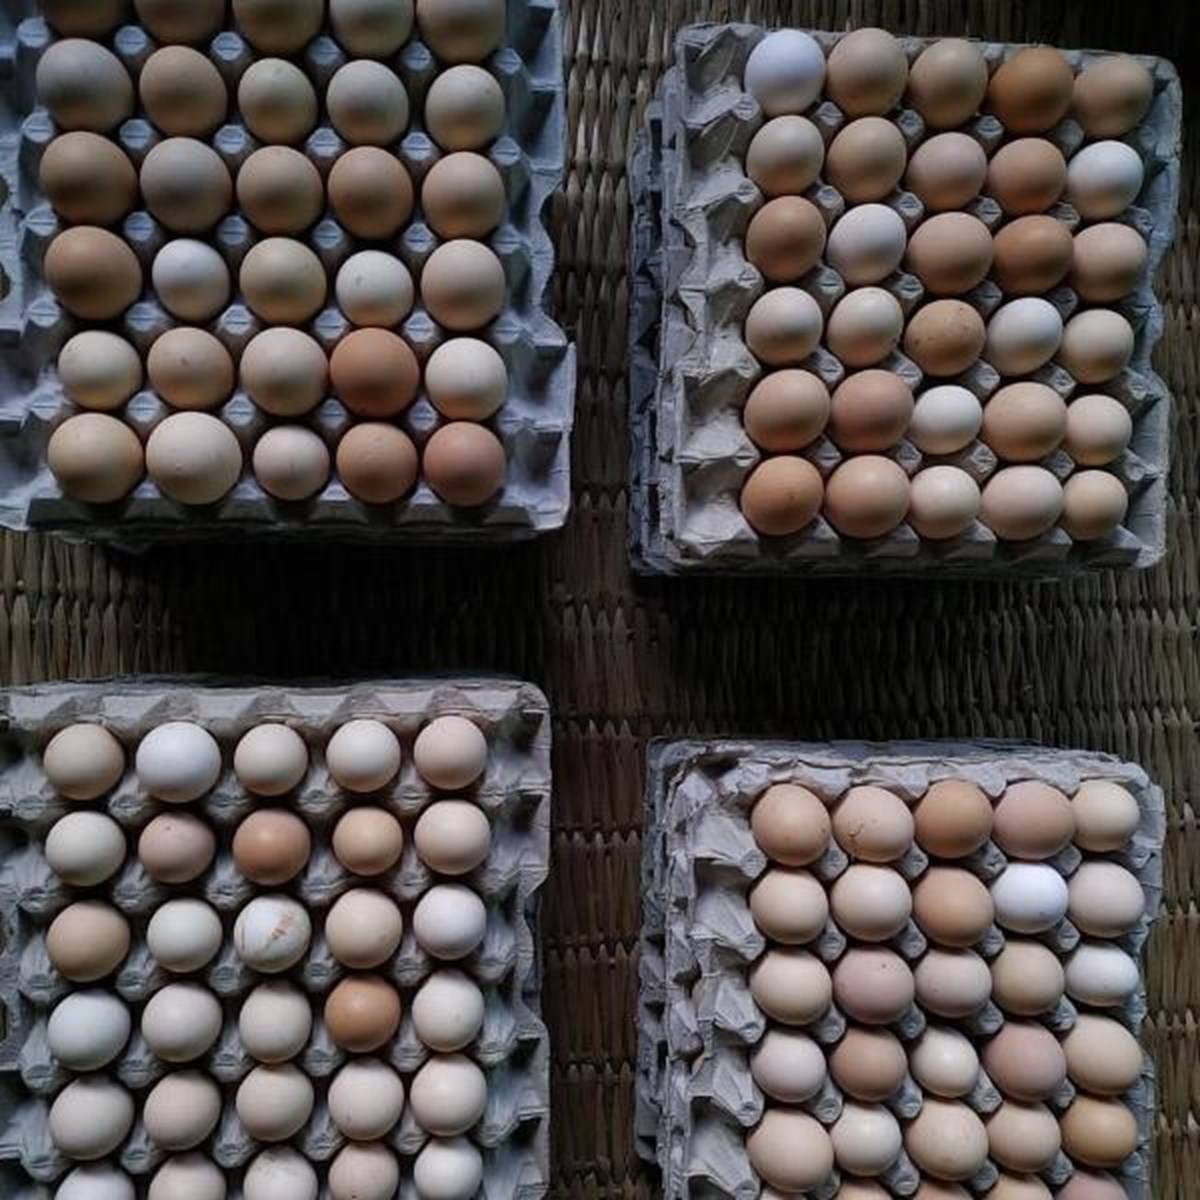 Crates of Eggs